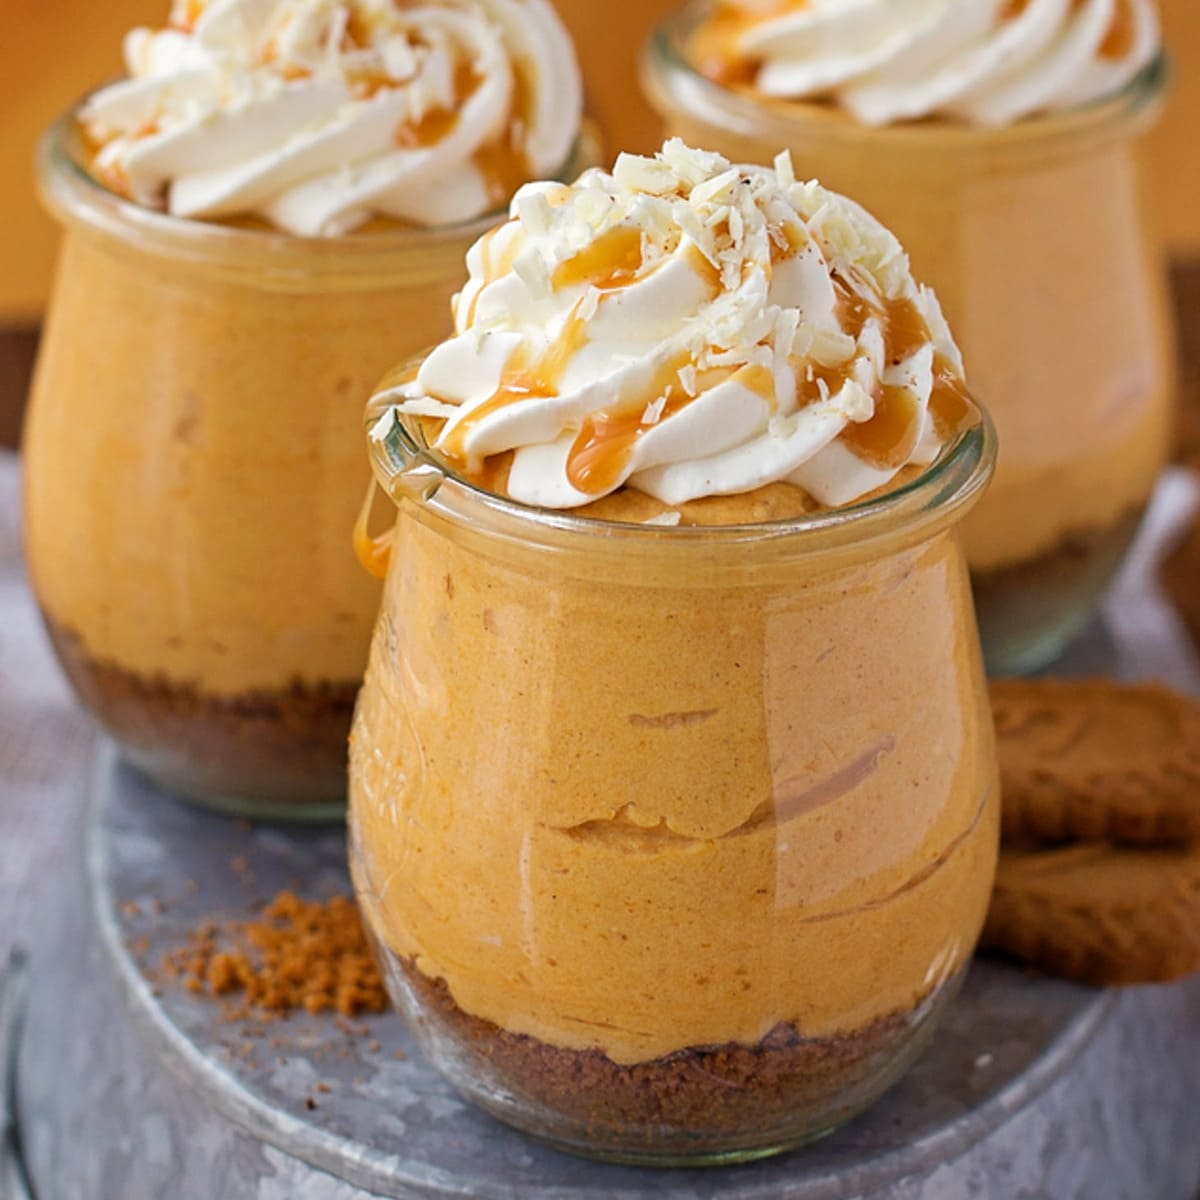 Thanksgiving desserts - no bake pumpkin cheesecake served in glass cups.